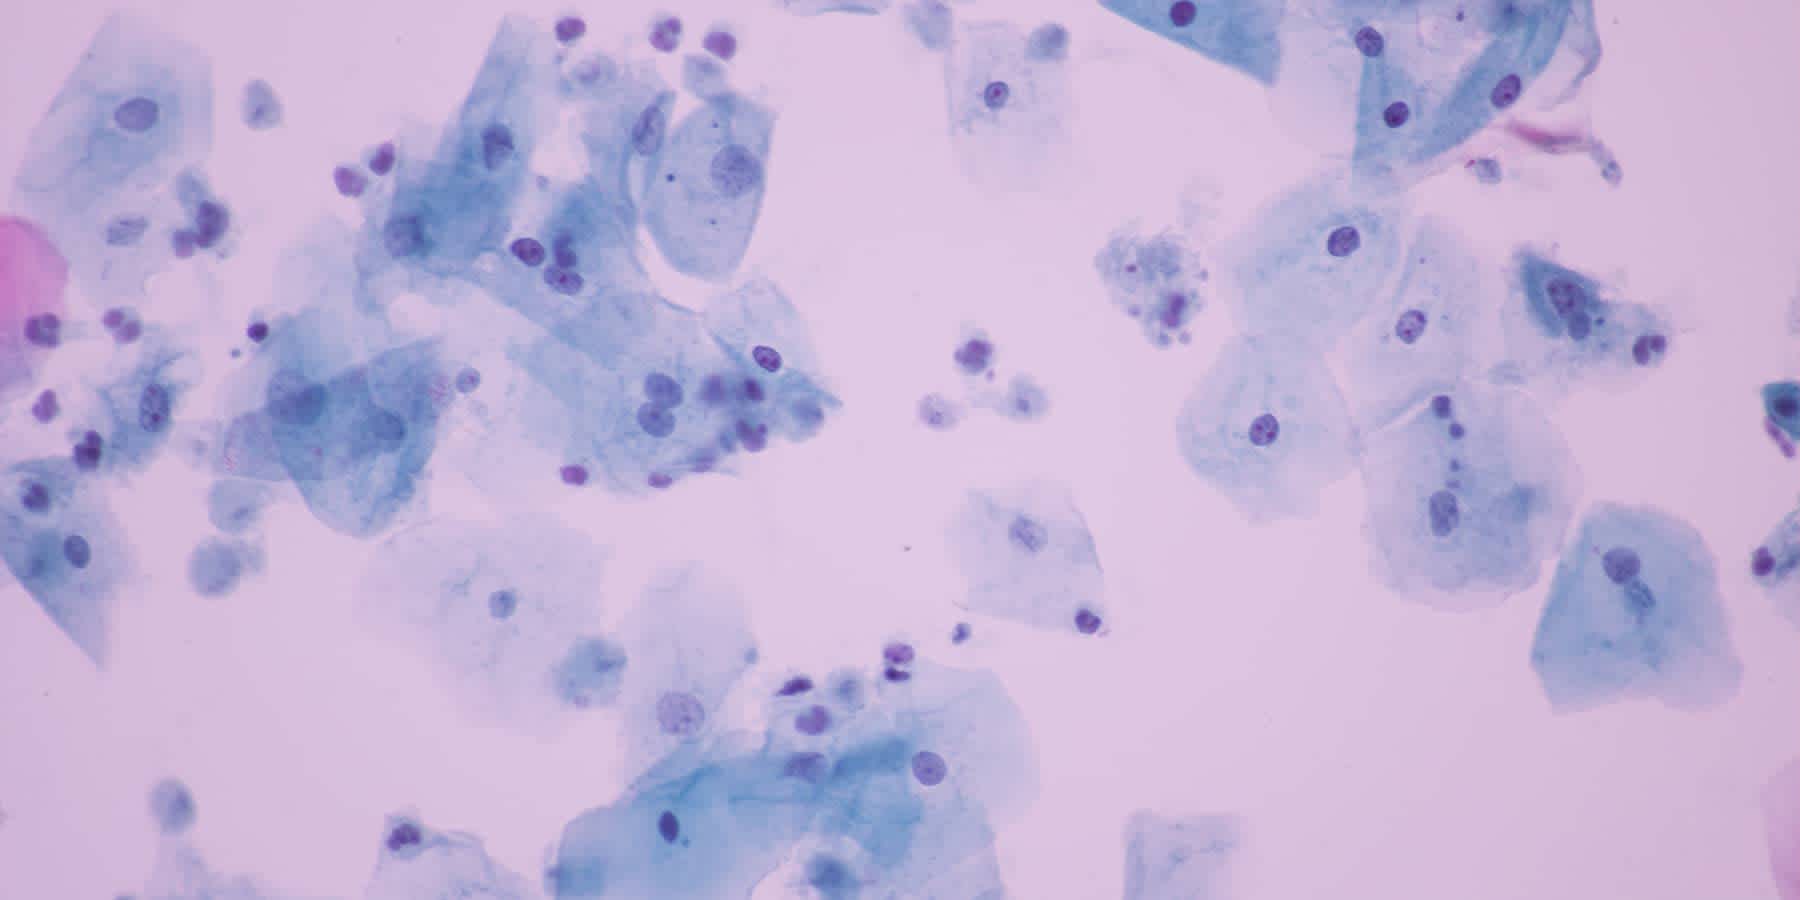 Microscopic image of microbes to represent dormant trichomoniasis